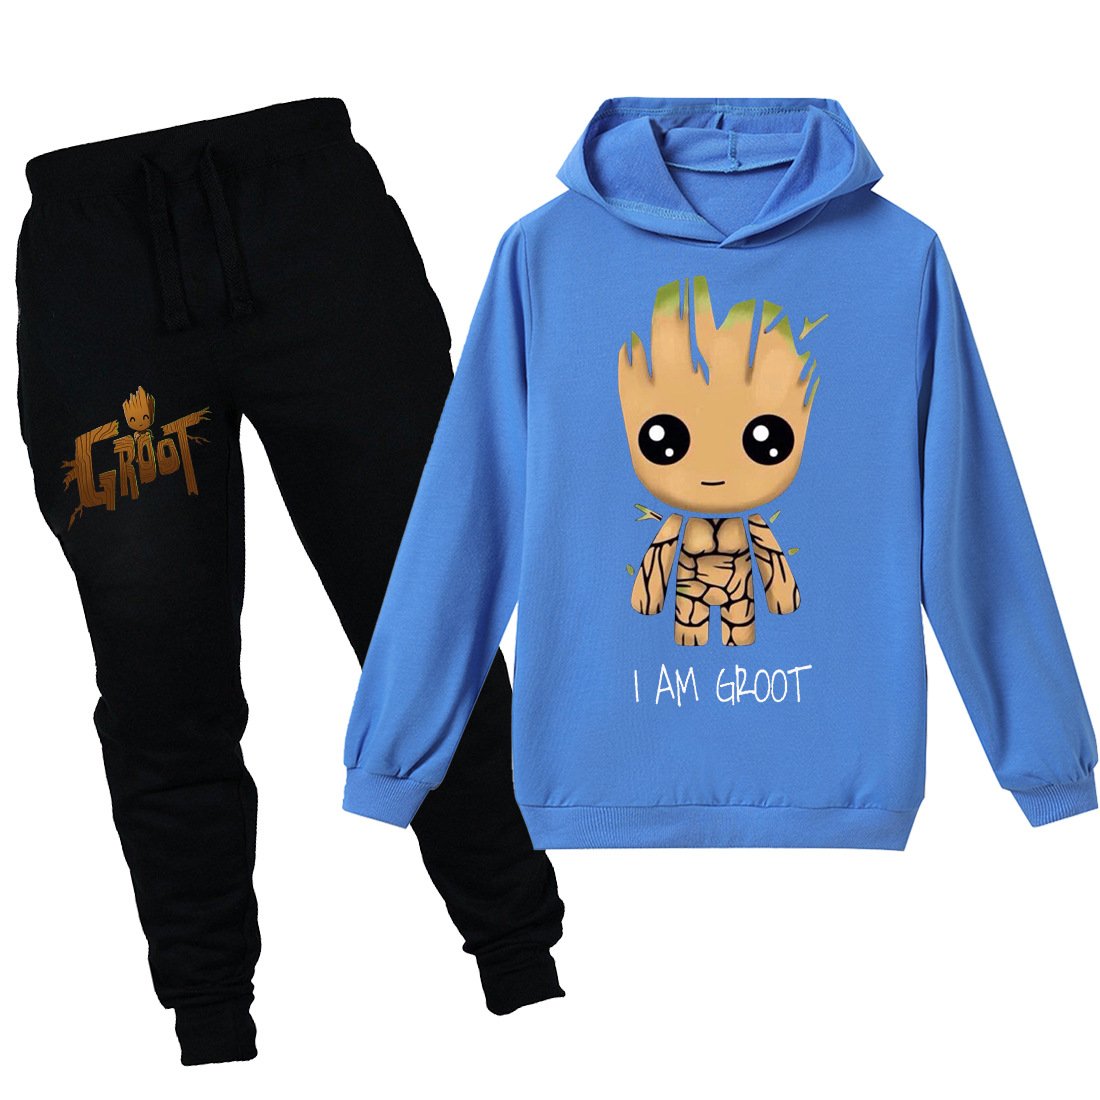 Kids I am Groot hooded shirt and pants 2pcs - mihoodie